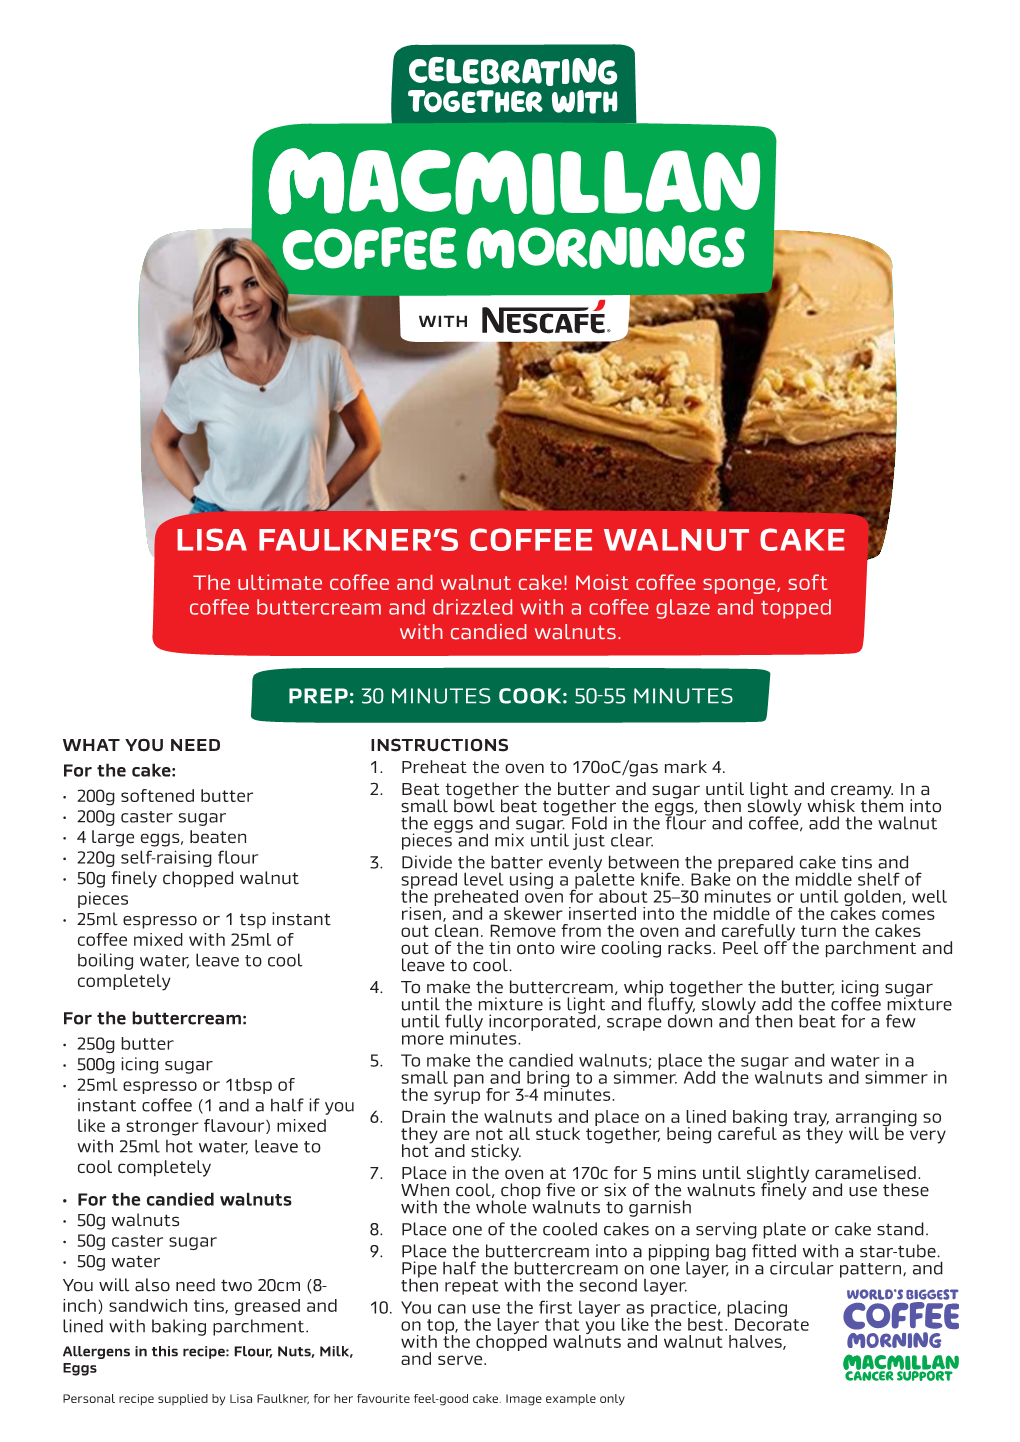 Lisa Faulkner's Coffee Walnut Cake